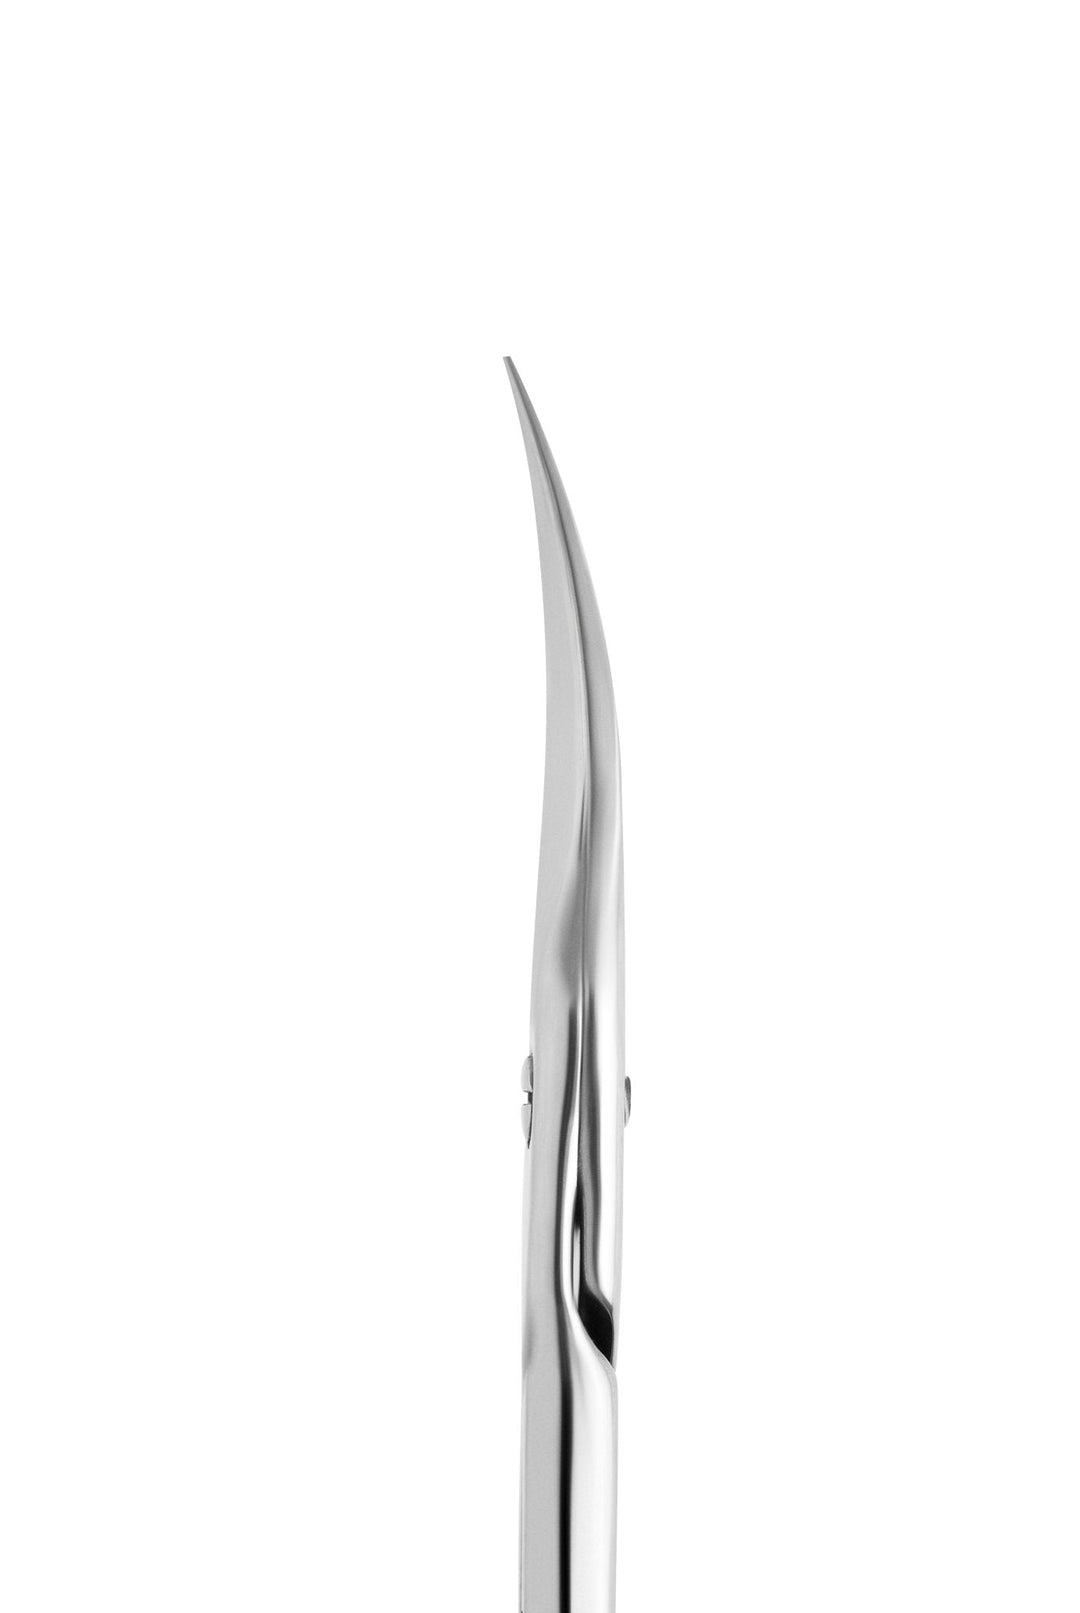 Staleks Pro Cuticle Scissors with Narrow Curved Blades Expert 22 Type 1 — 25 mm blades | U-tools